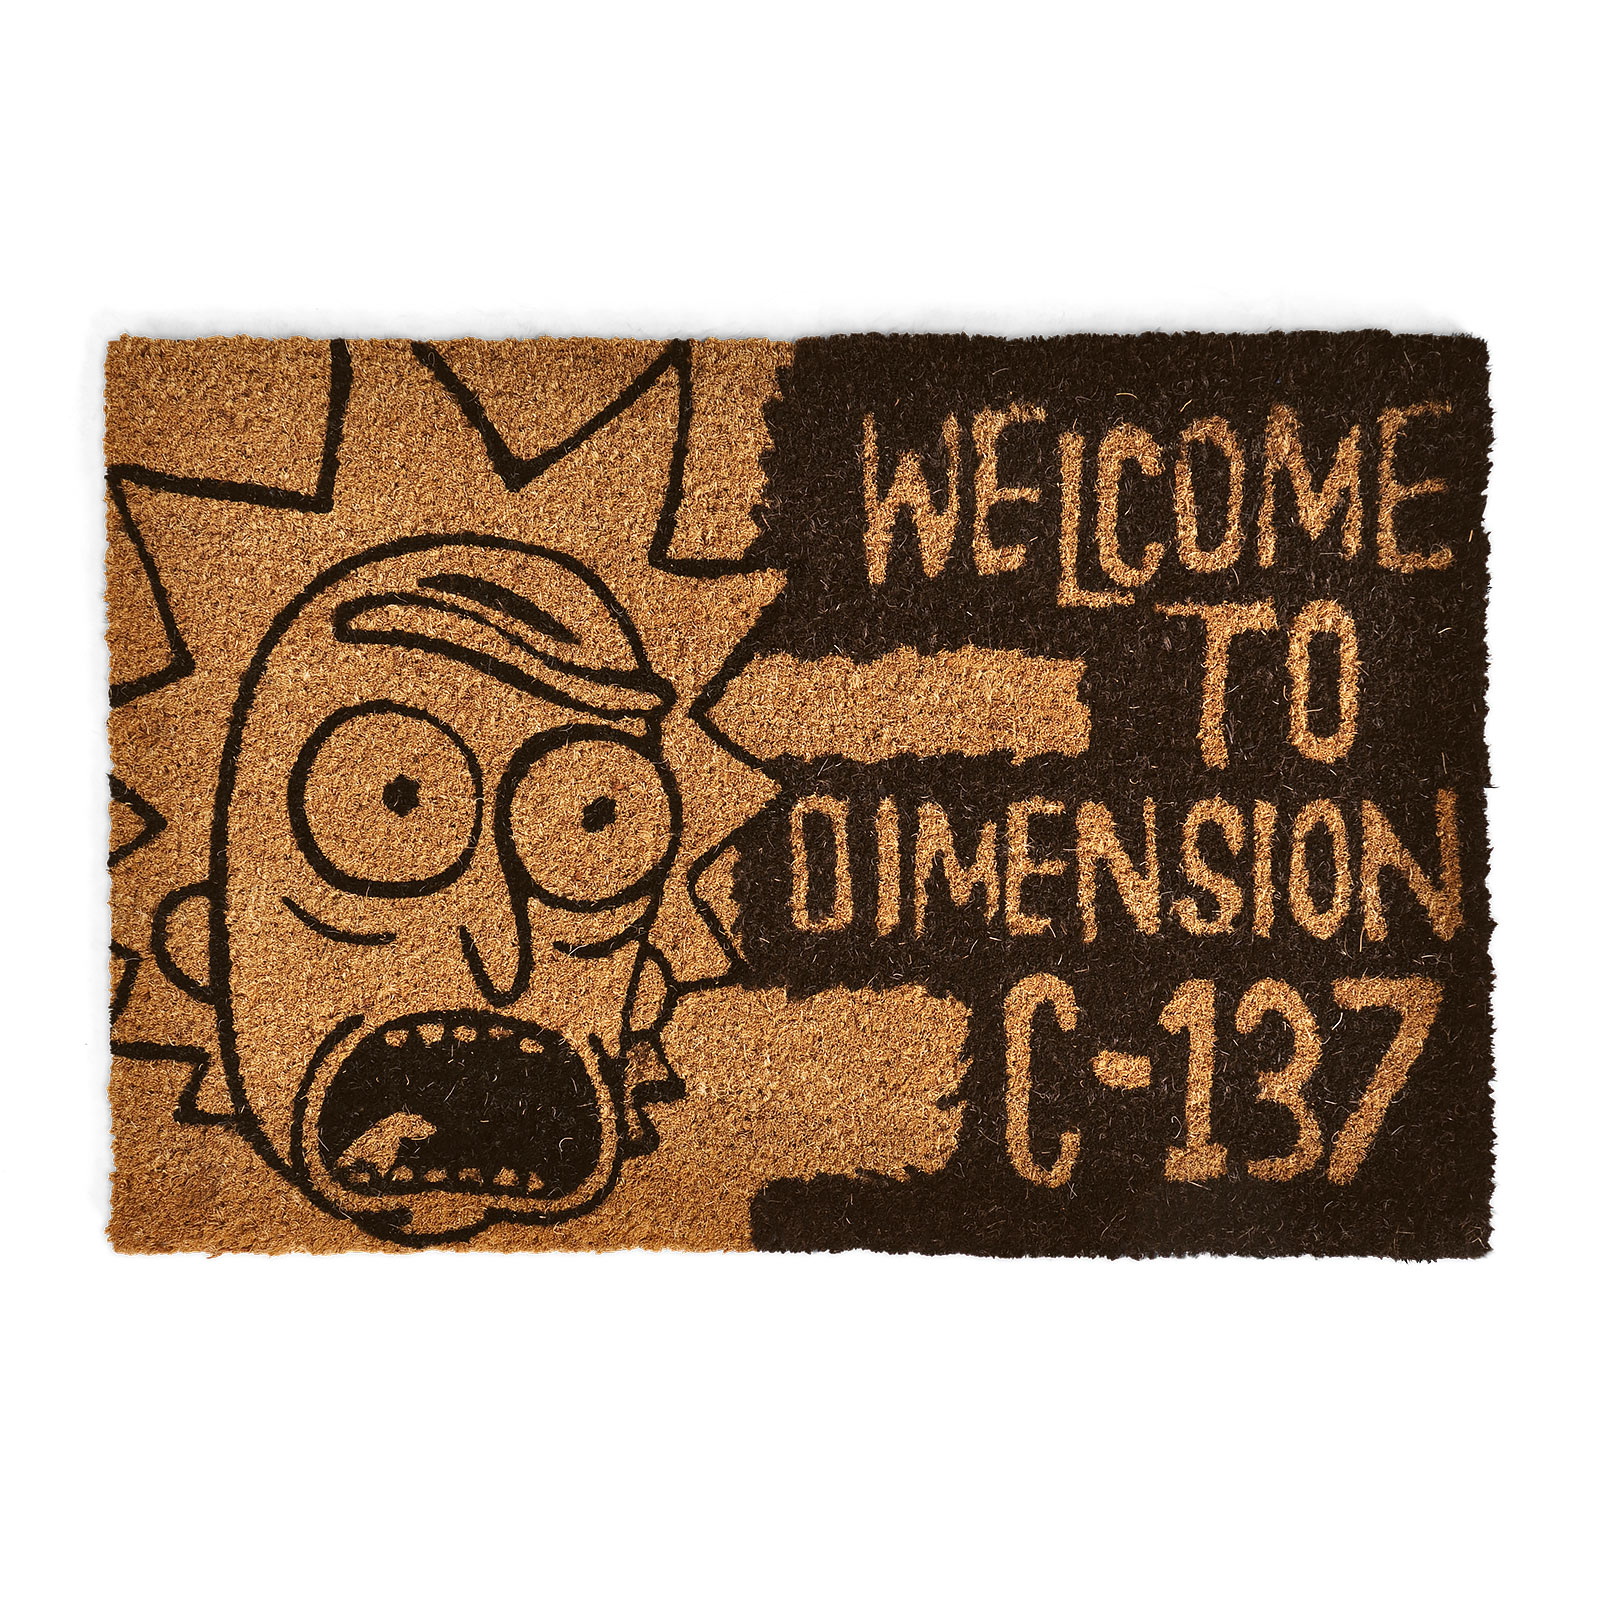 Rick and Morty - Dimension C-137 Doormat